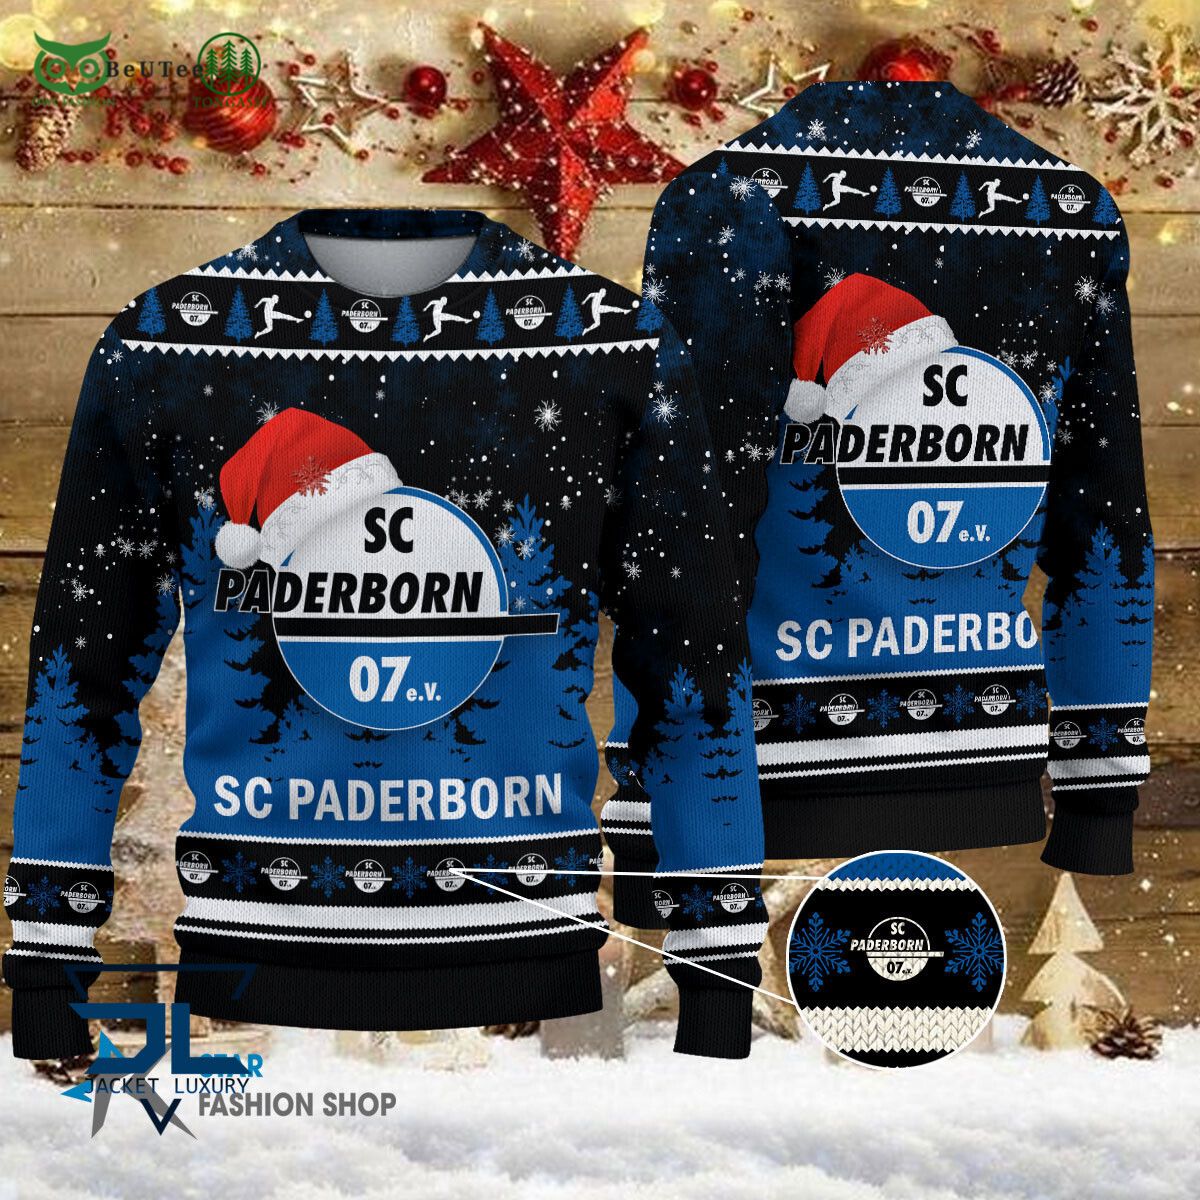 sc paderborn bundesliga germany league ugly sweater 1 f2Yhb